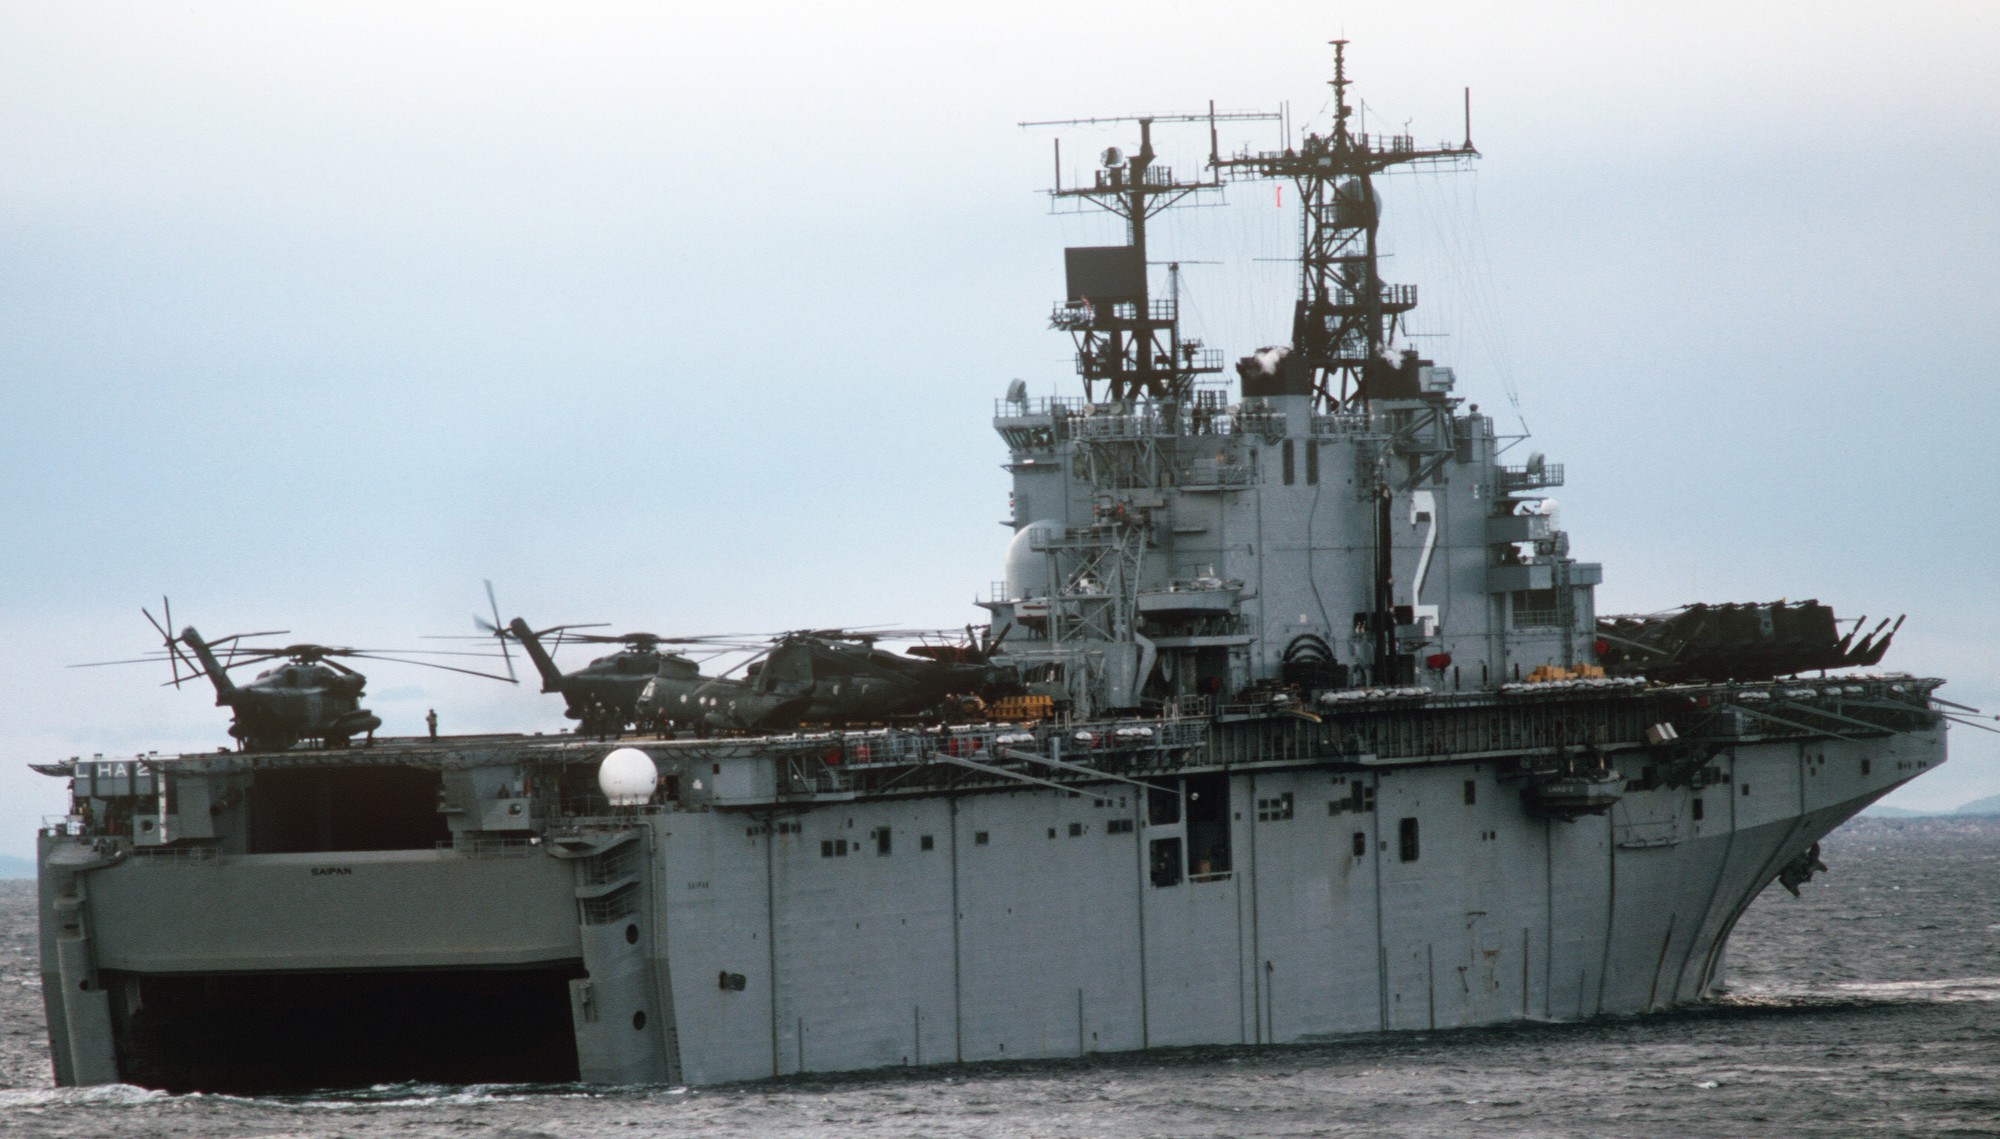 lha-2 uss saipan tarawa class amphibious assault ship us navy 22nd mau hmm-162 usmc nato exercise northern wedding 63